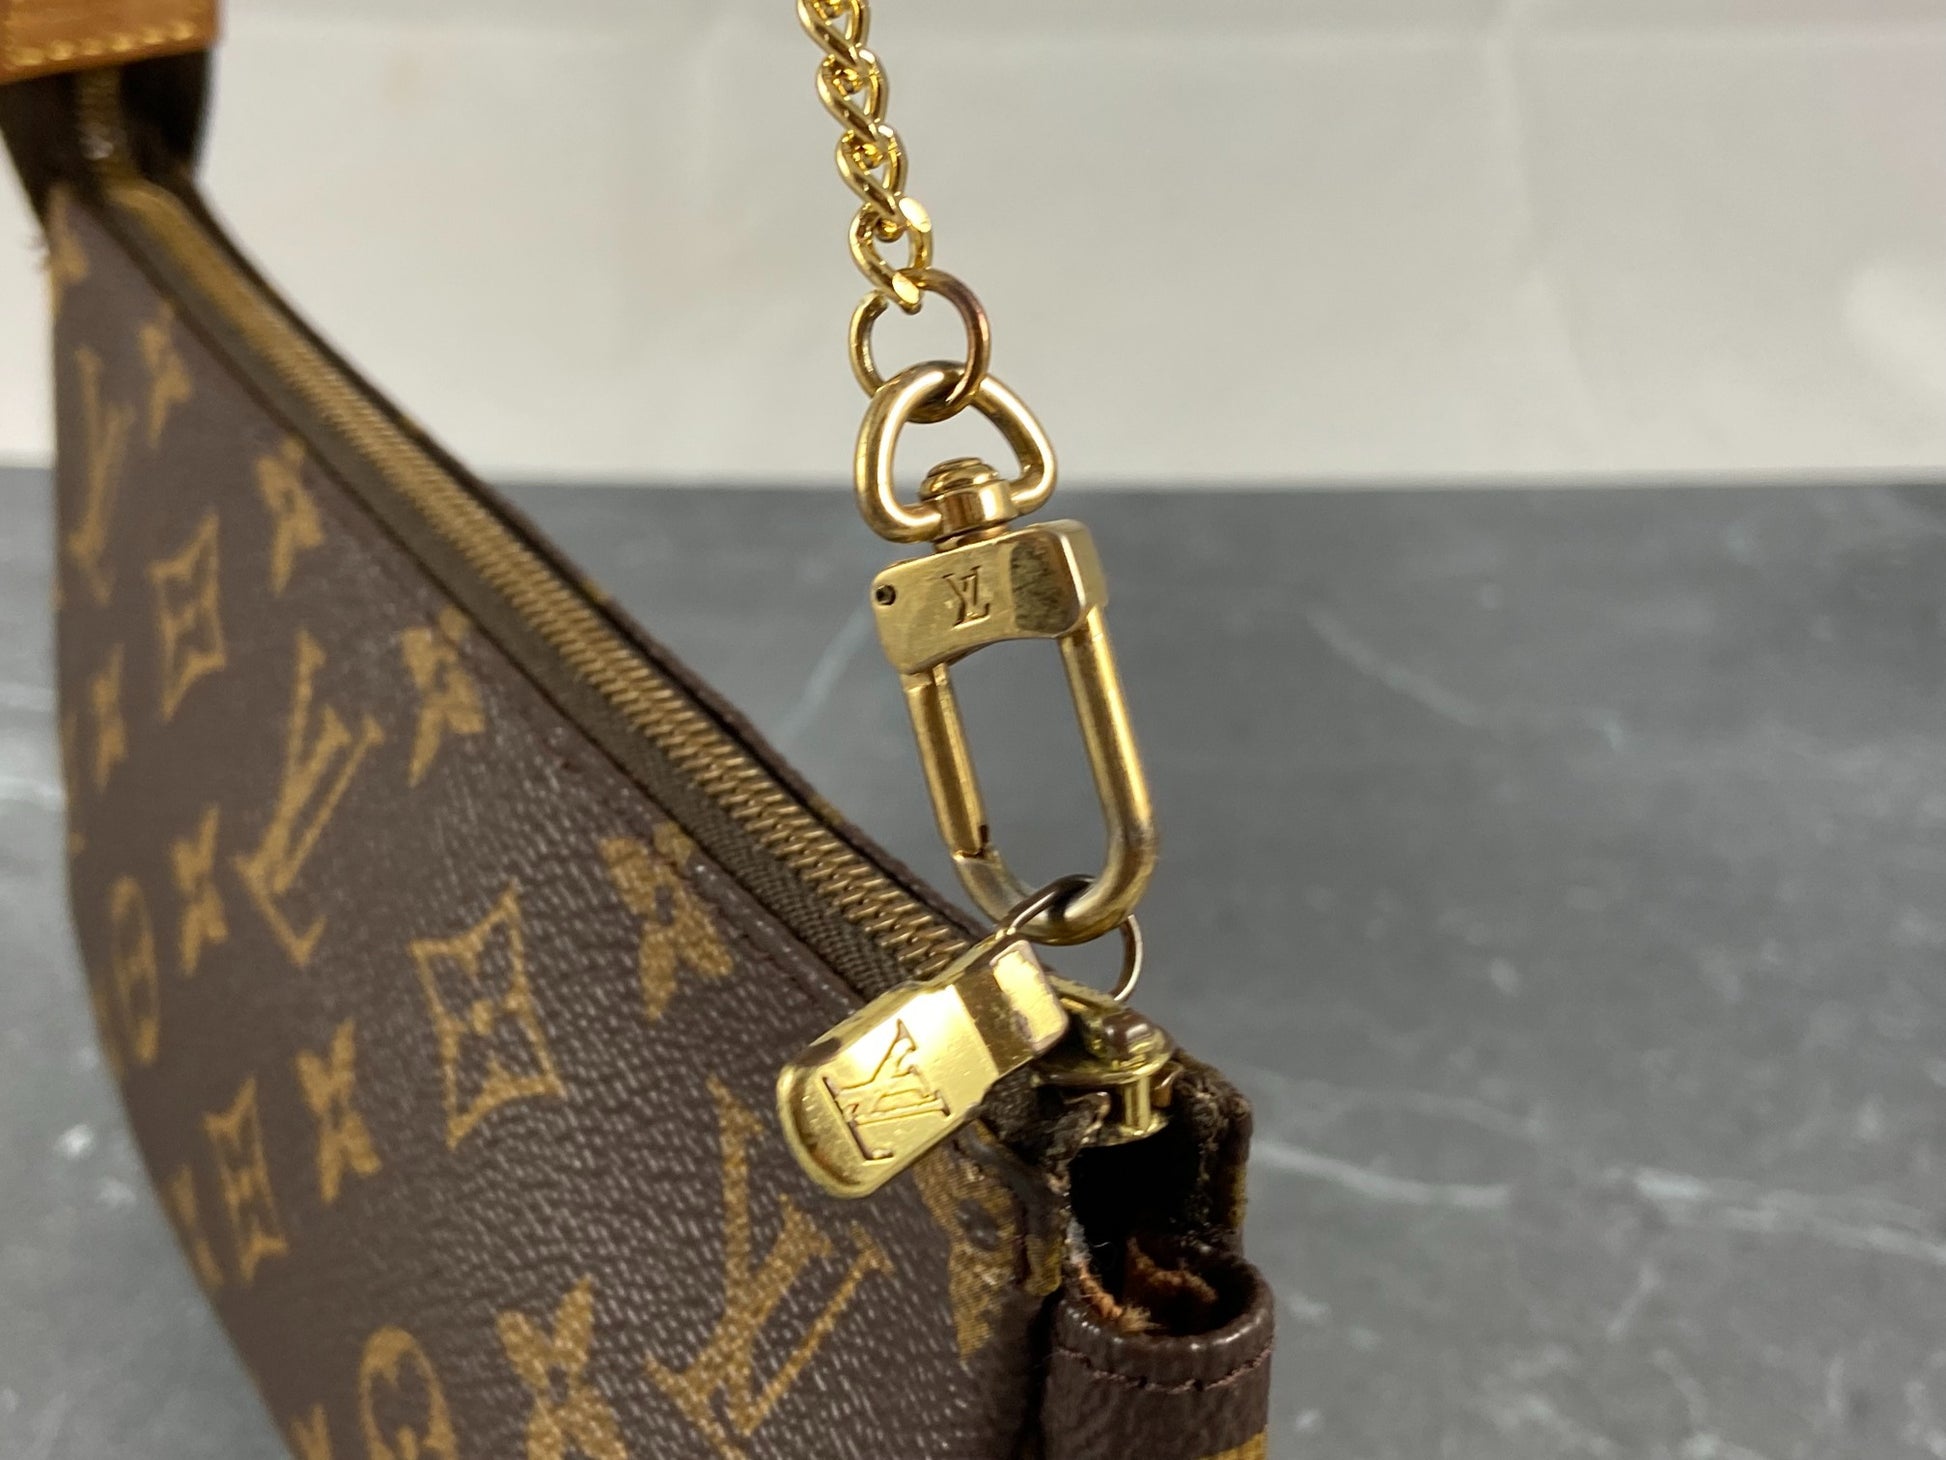 Pochette accessoire cloth handbag Louis Vuitton White in Cloth - 33425250